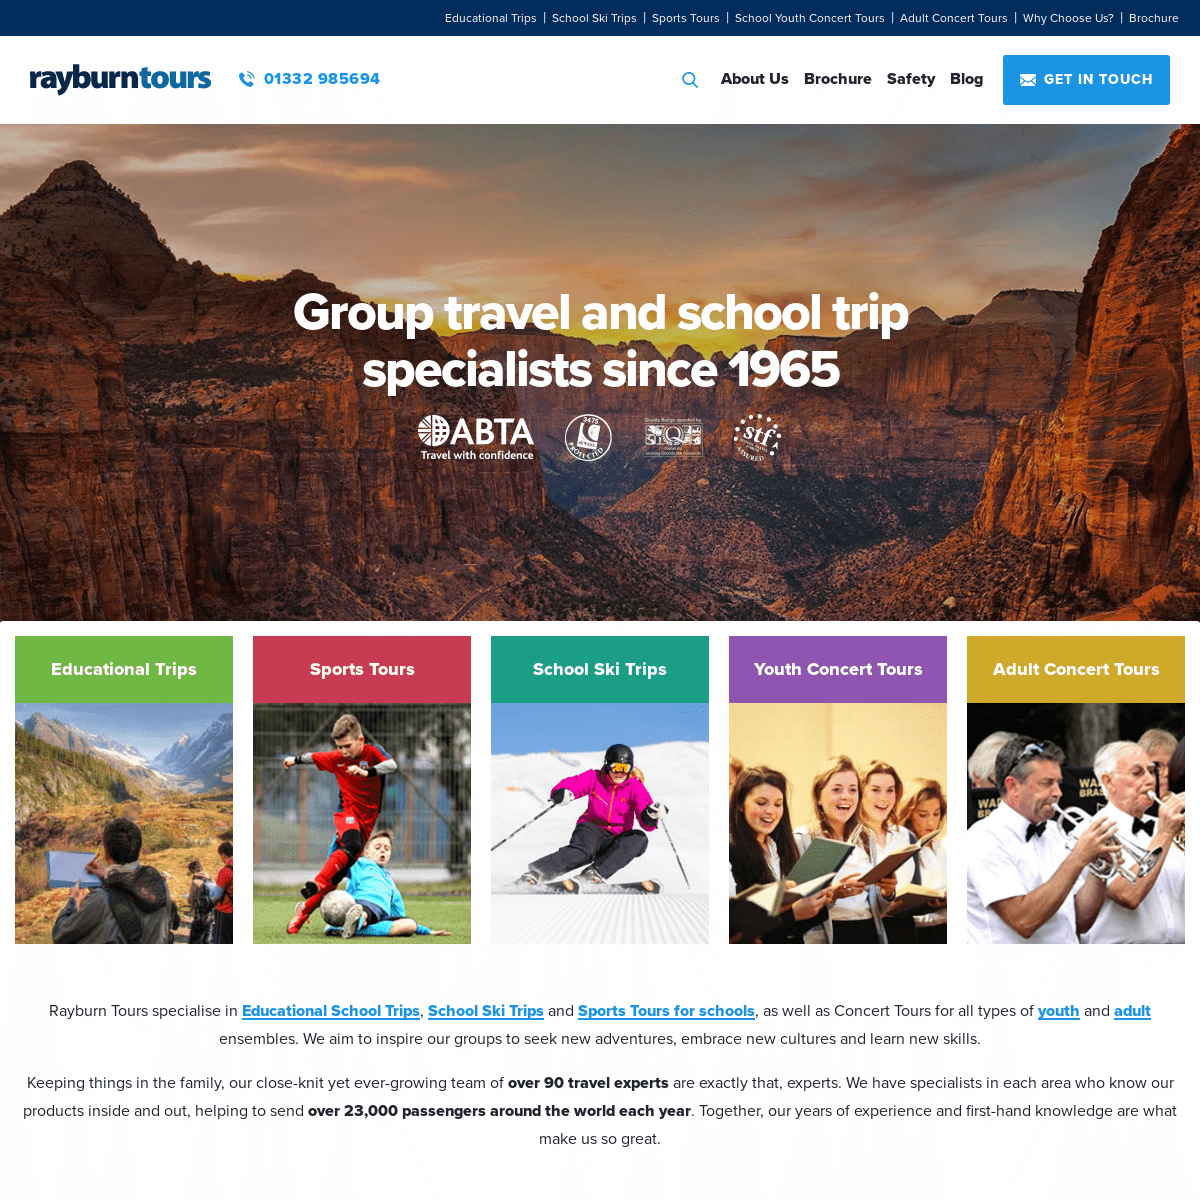 School Trips | School Travel Company | Rayburn Tours